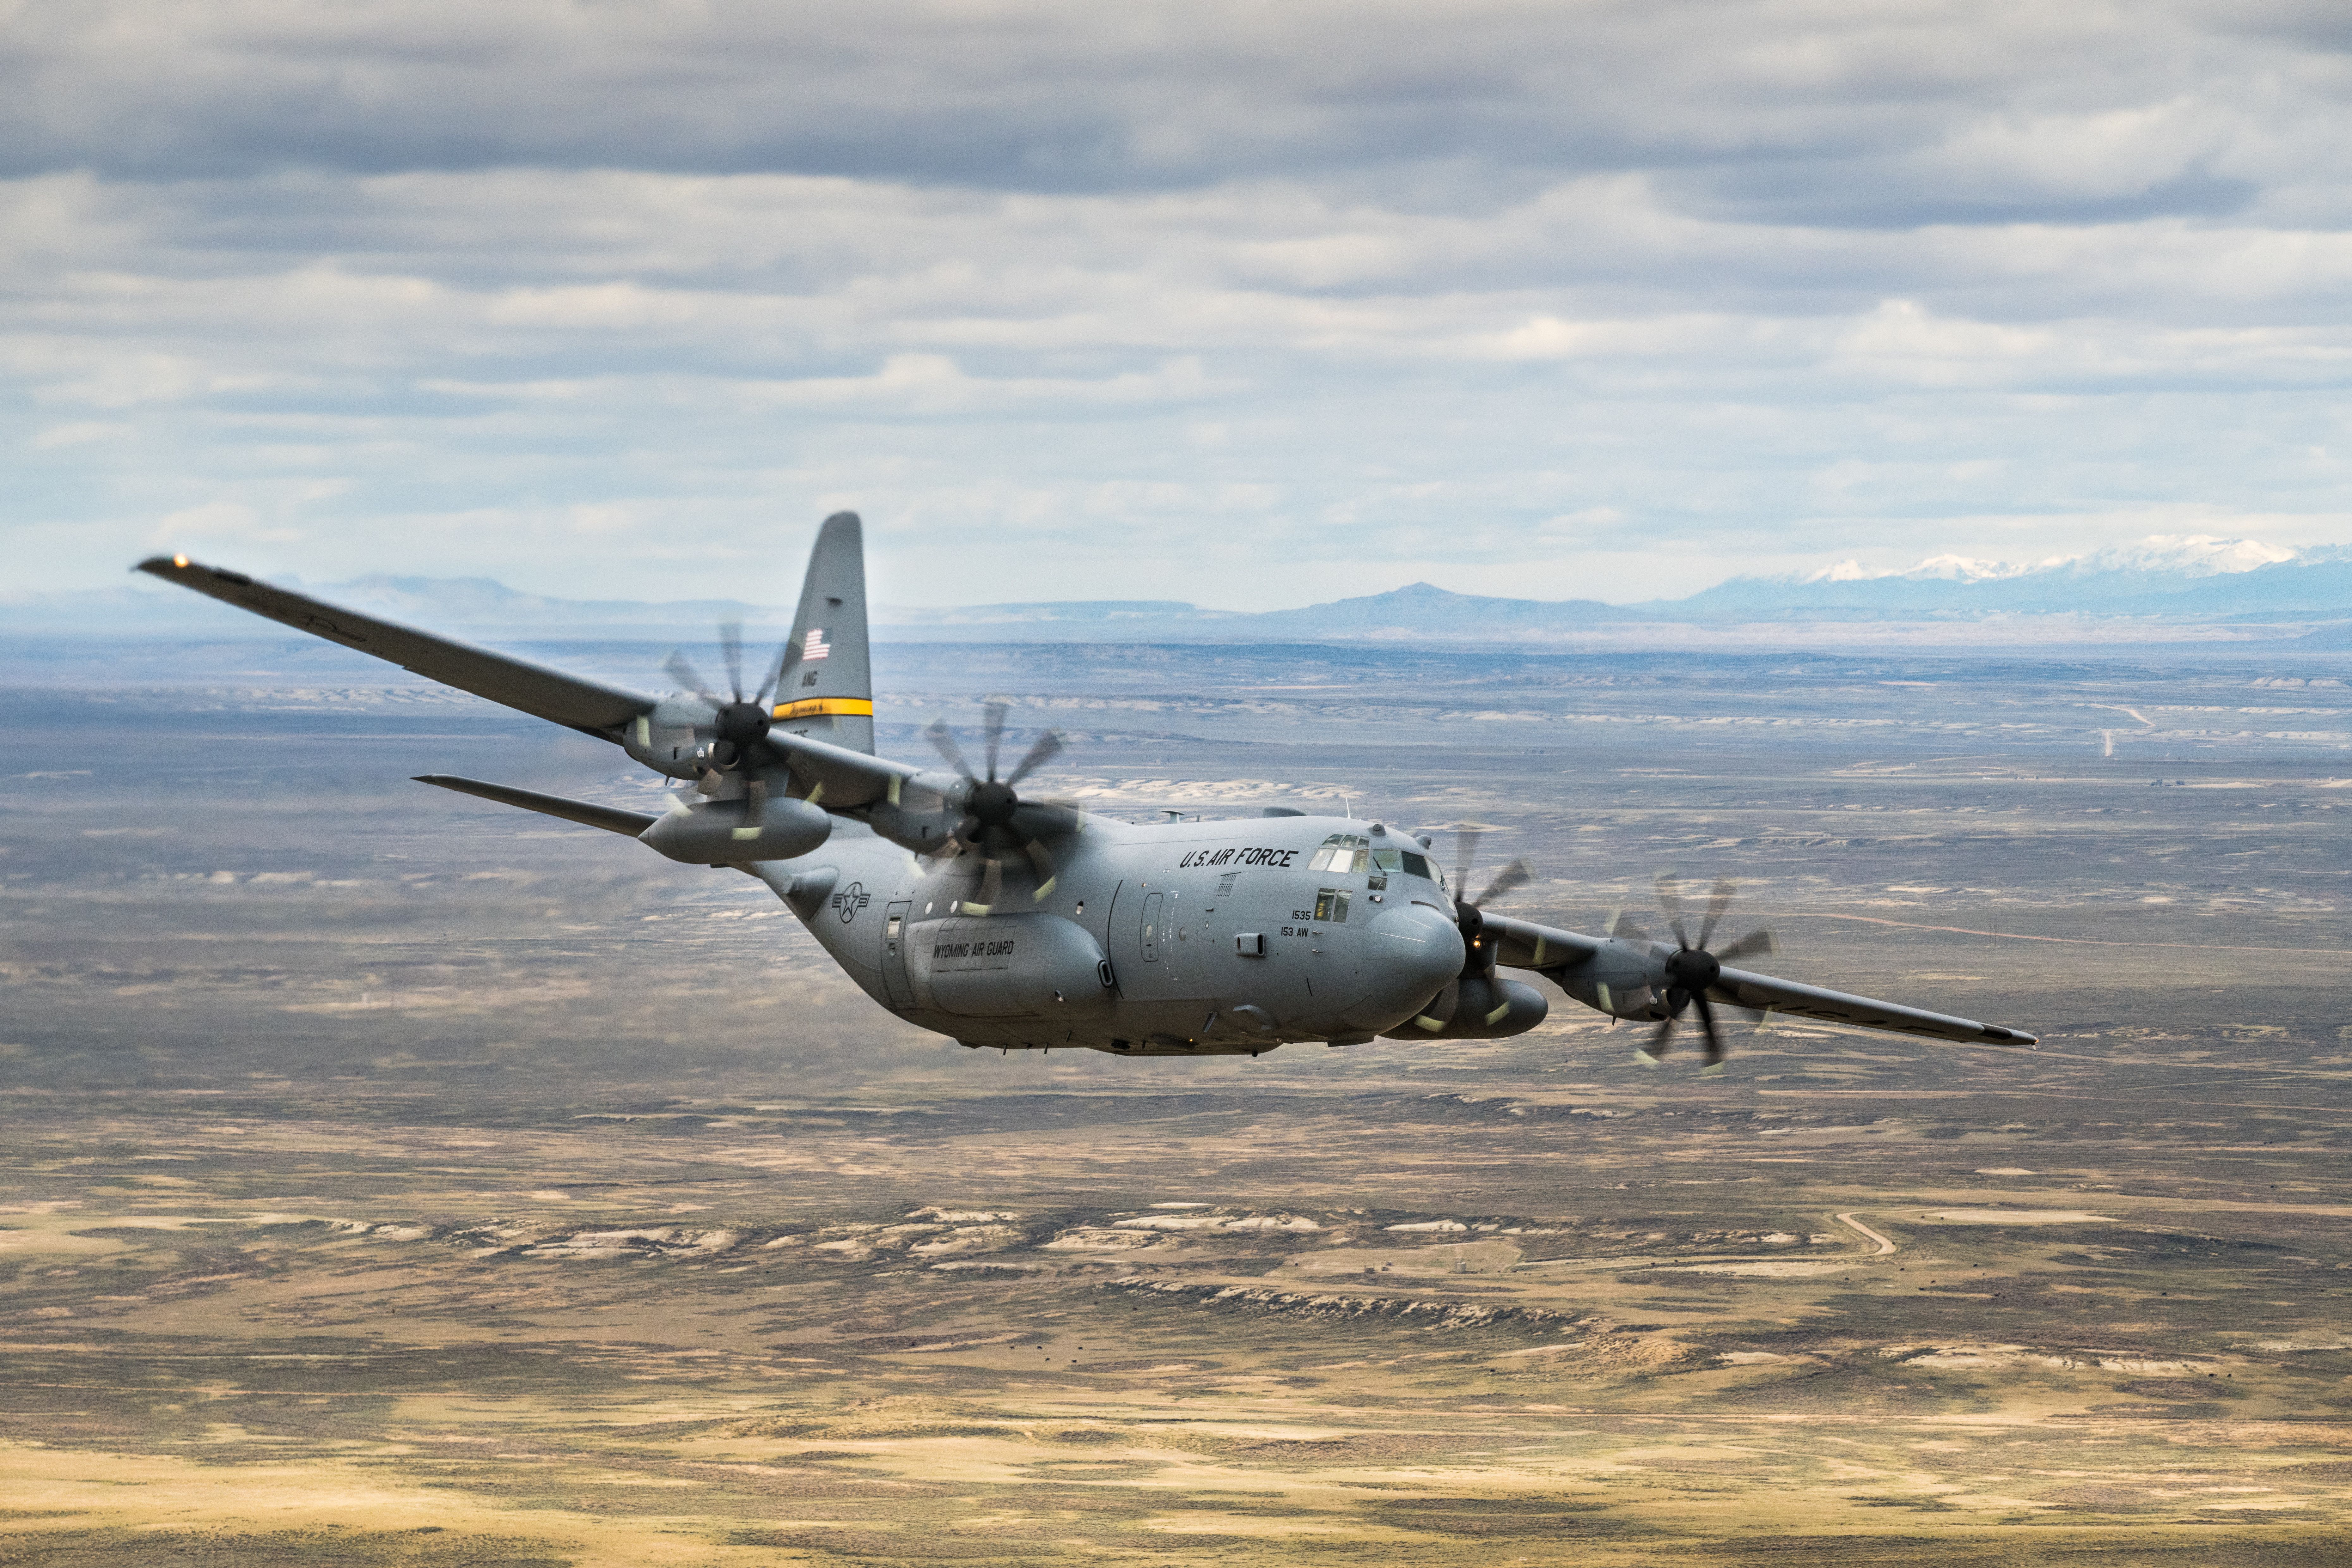 A USAF Lockheed C-130 Hercules flying over a desert.